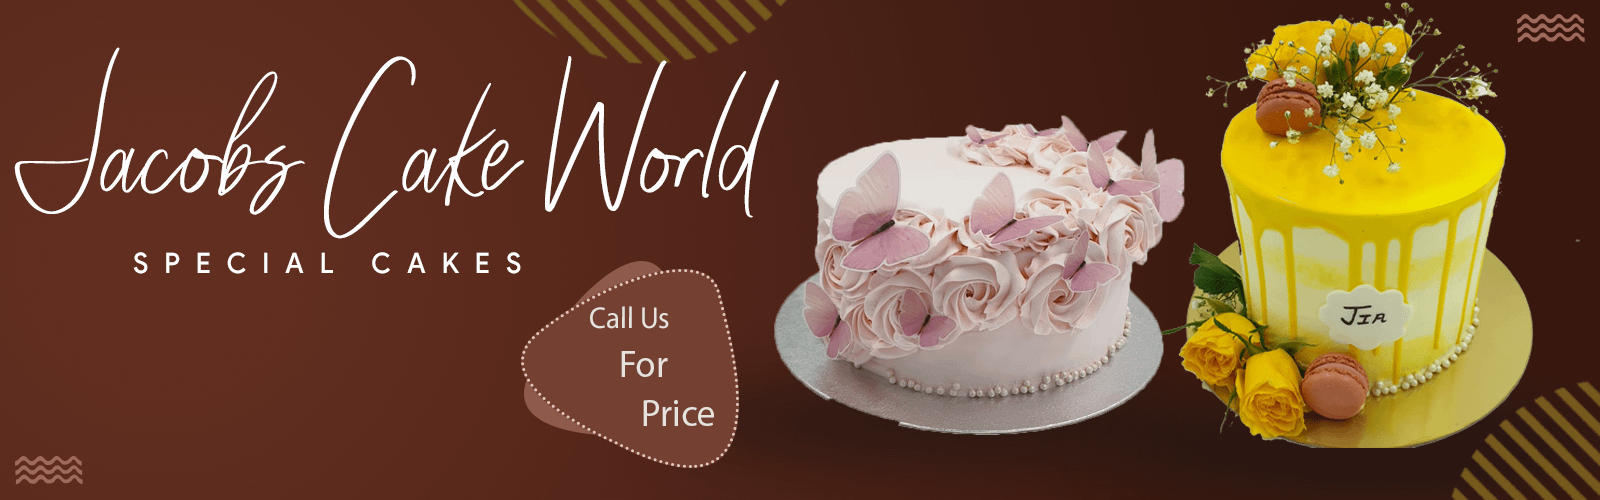 Jacobs_cake_world